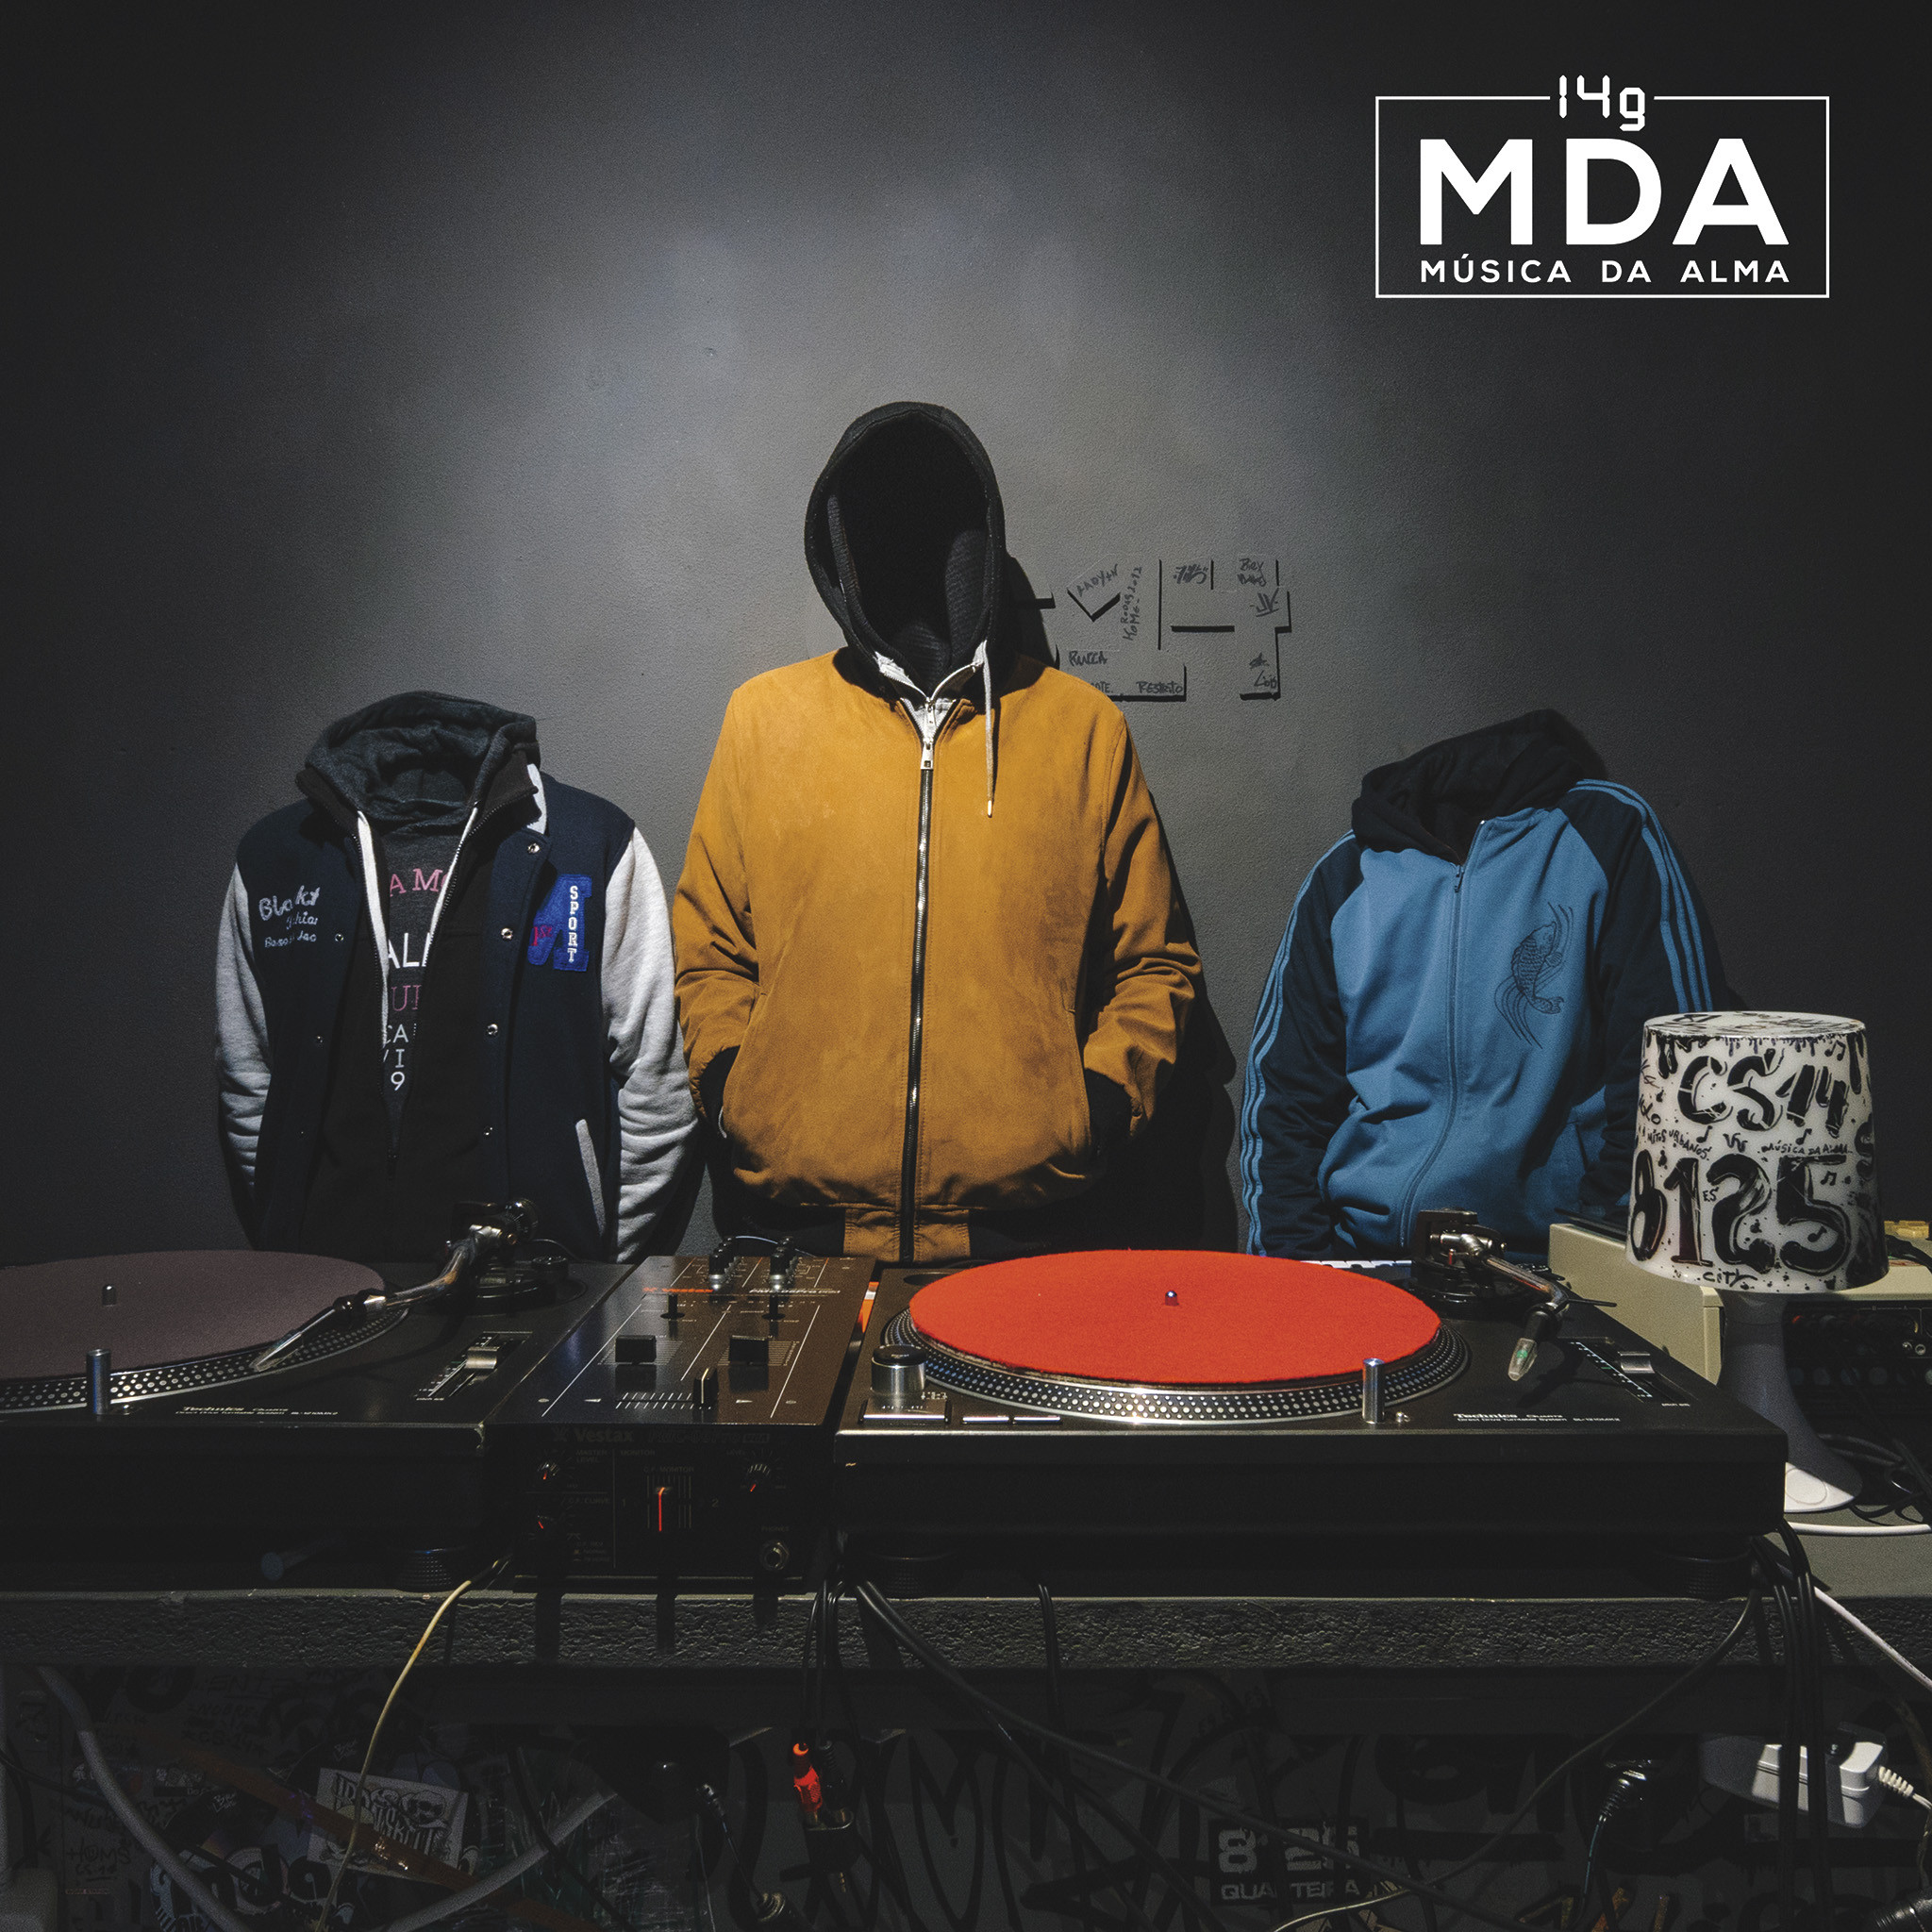 MDA - 14g de MDA